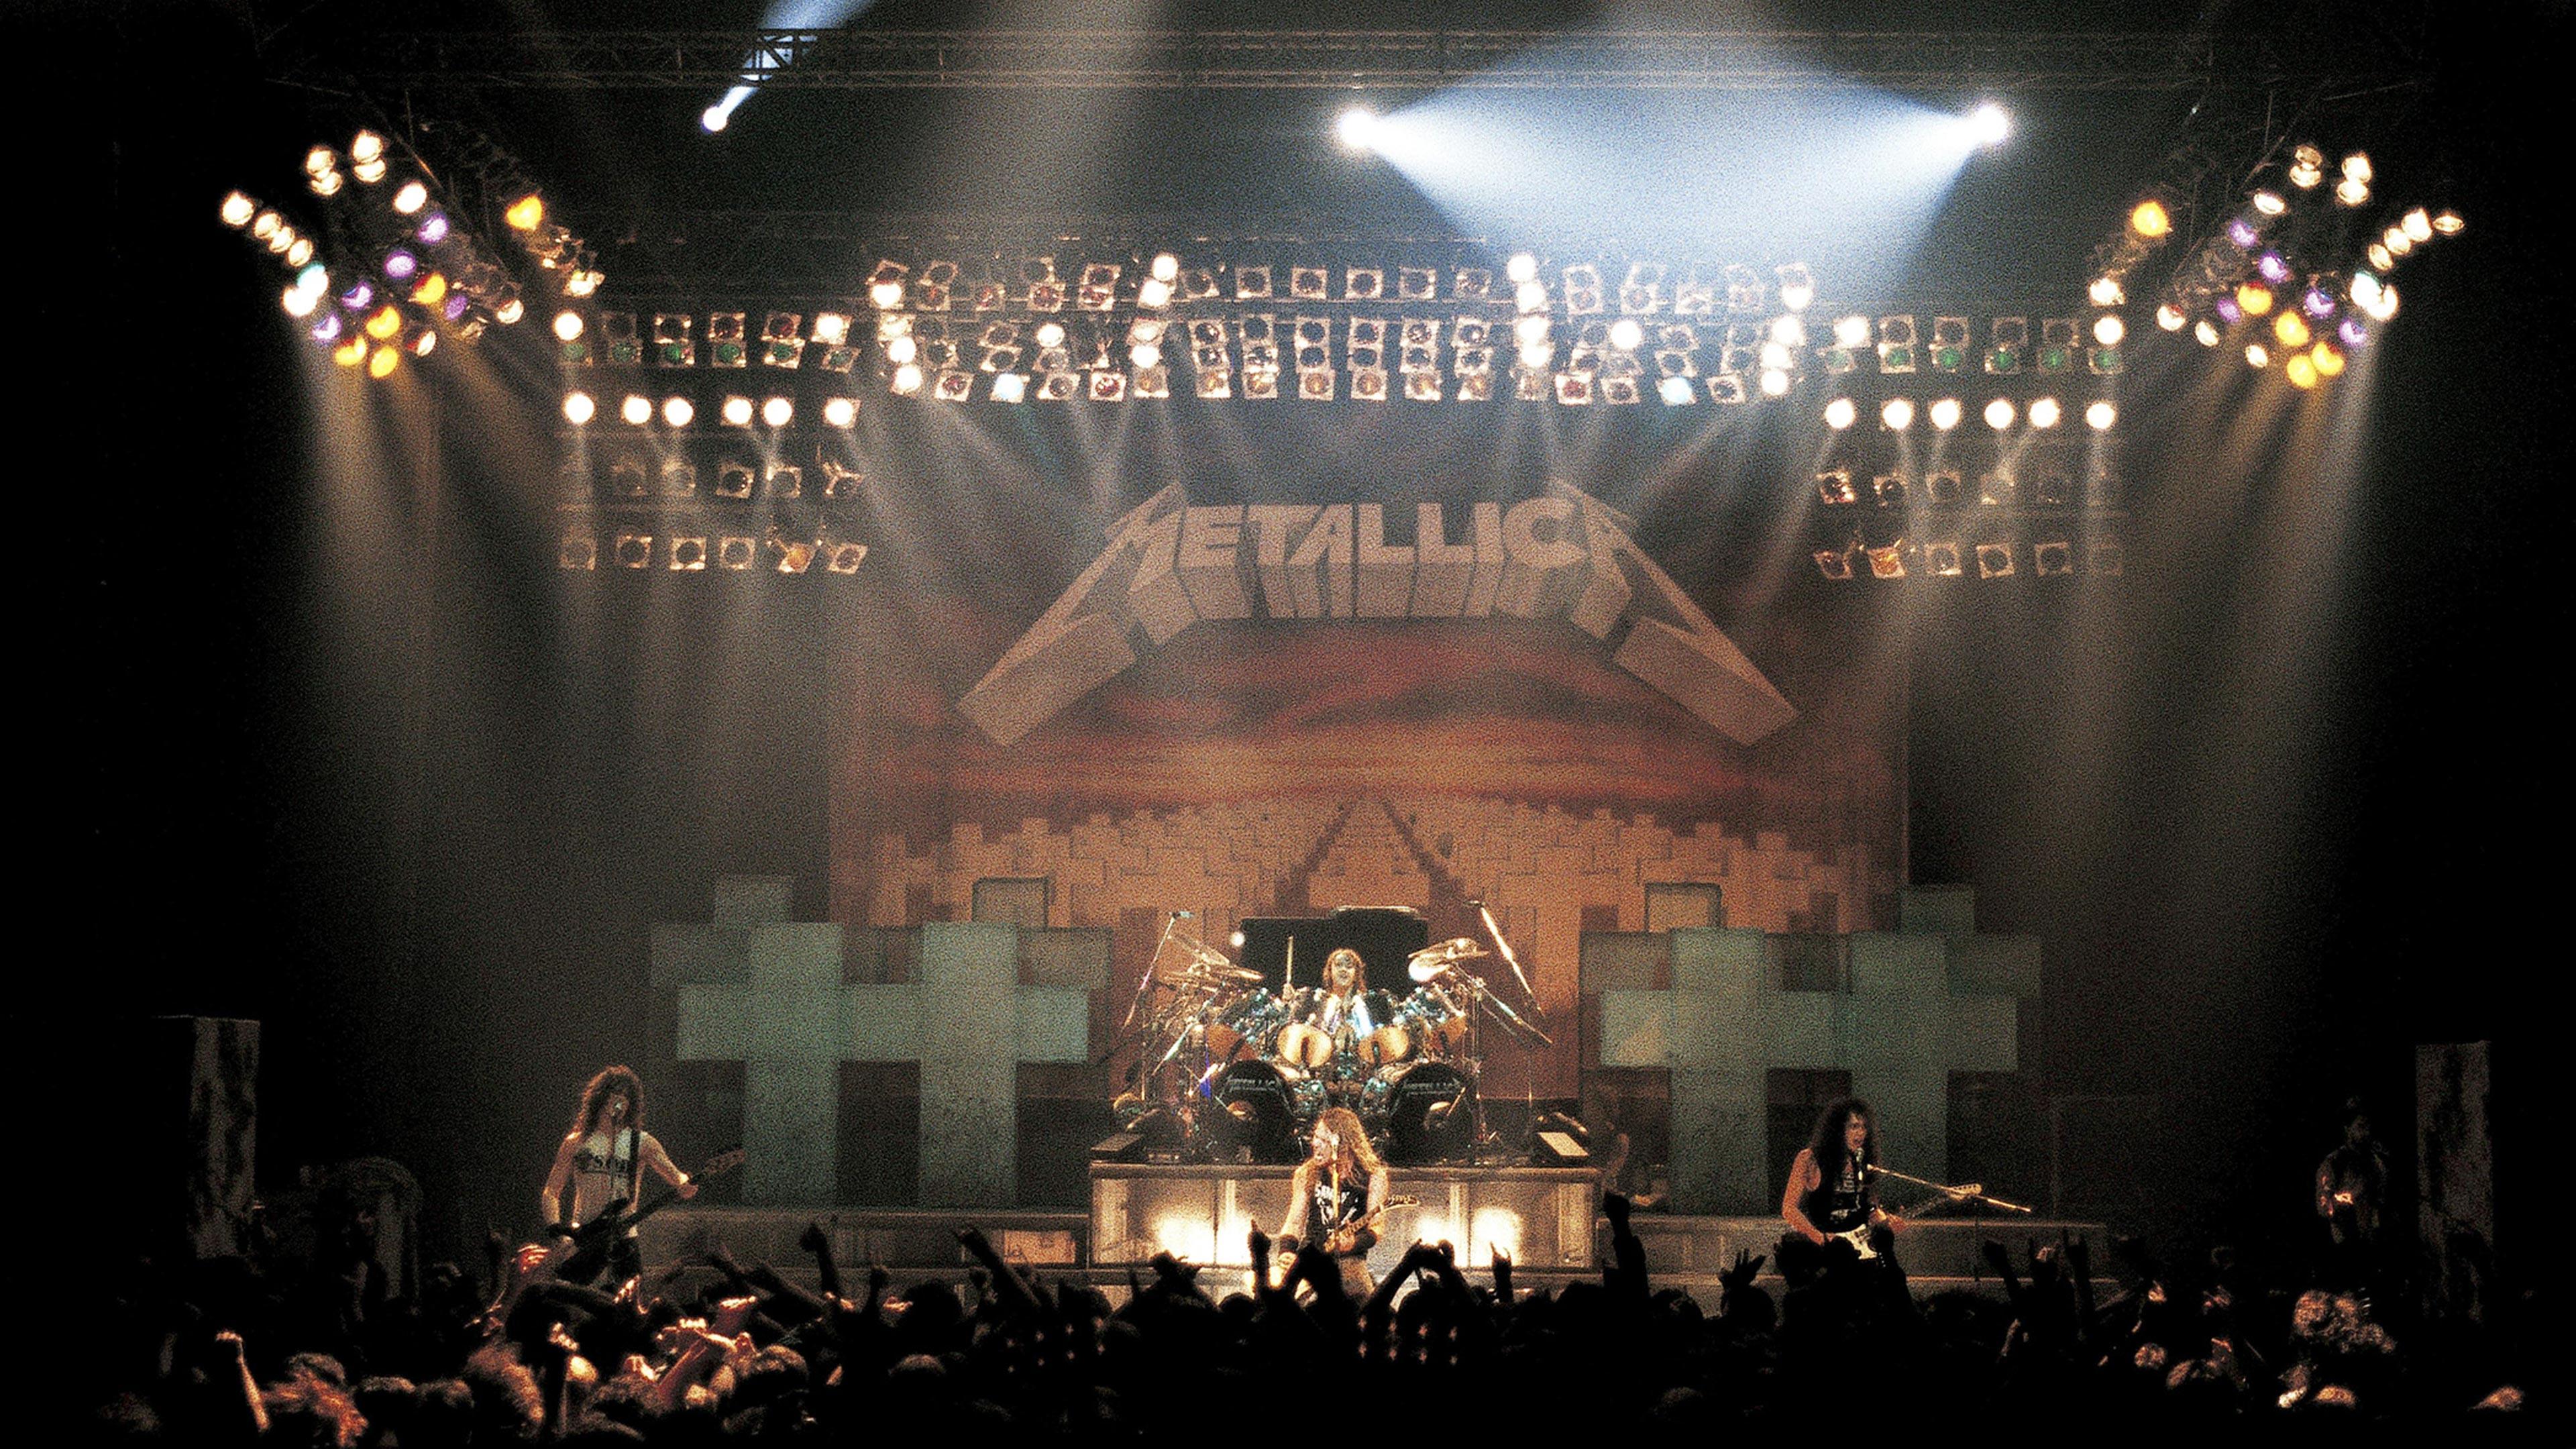 metallica 1986 tour dates